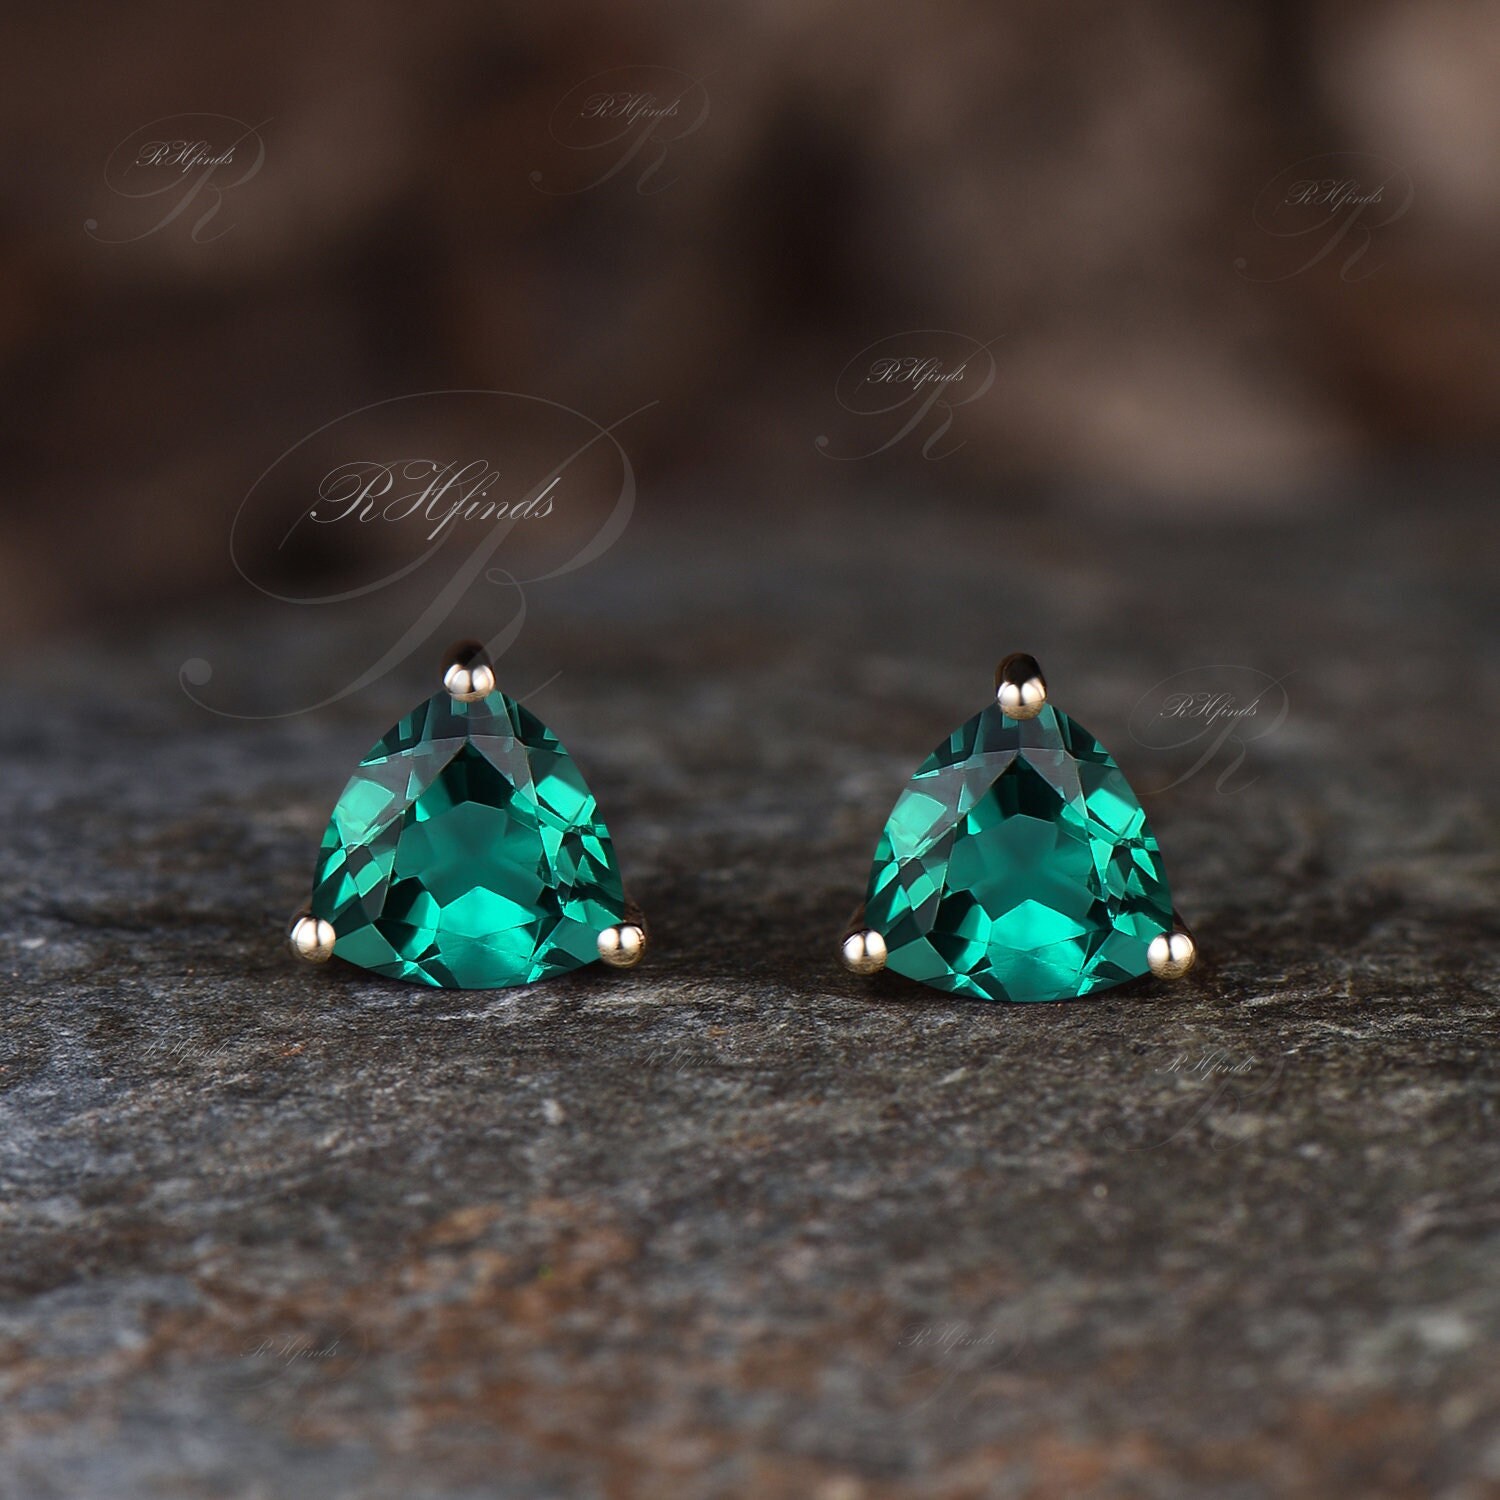 500pcs Custom Emerald Earring Cards, Embossing Earring Display